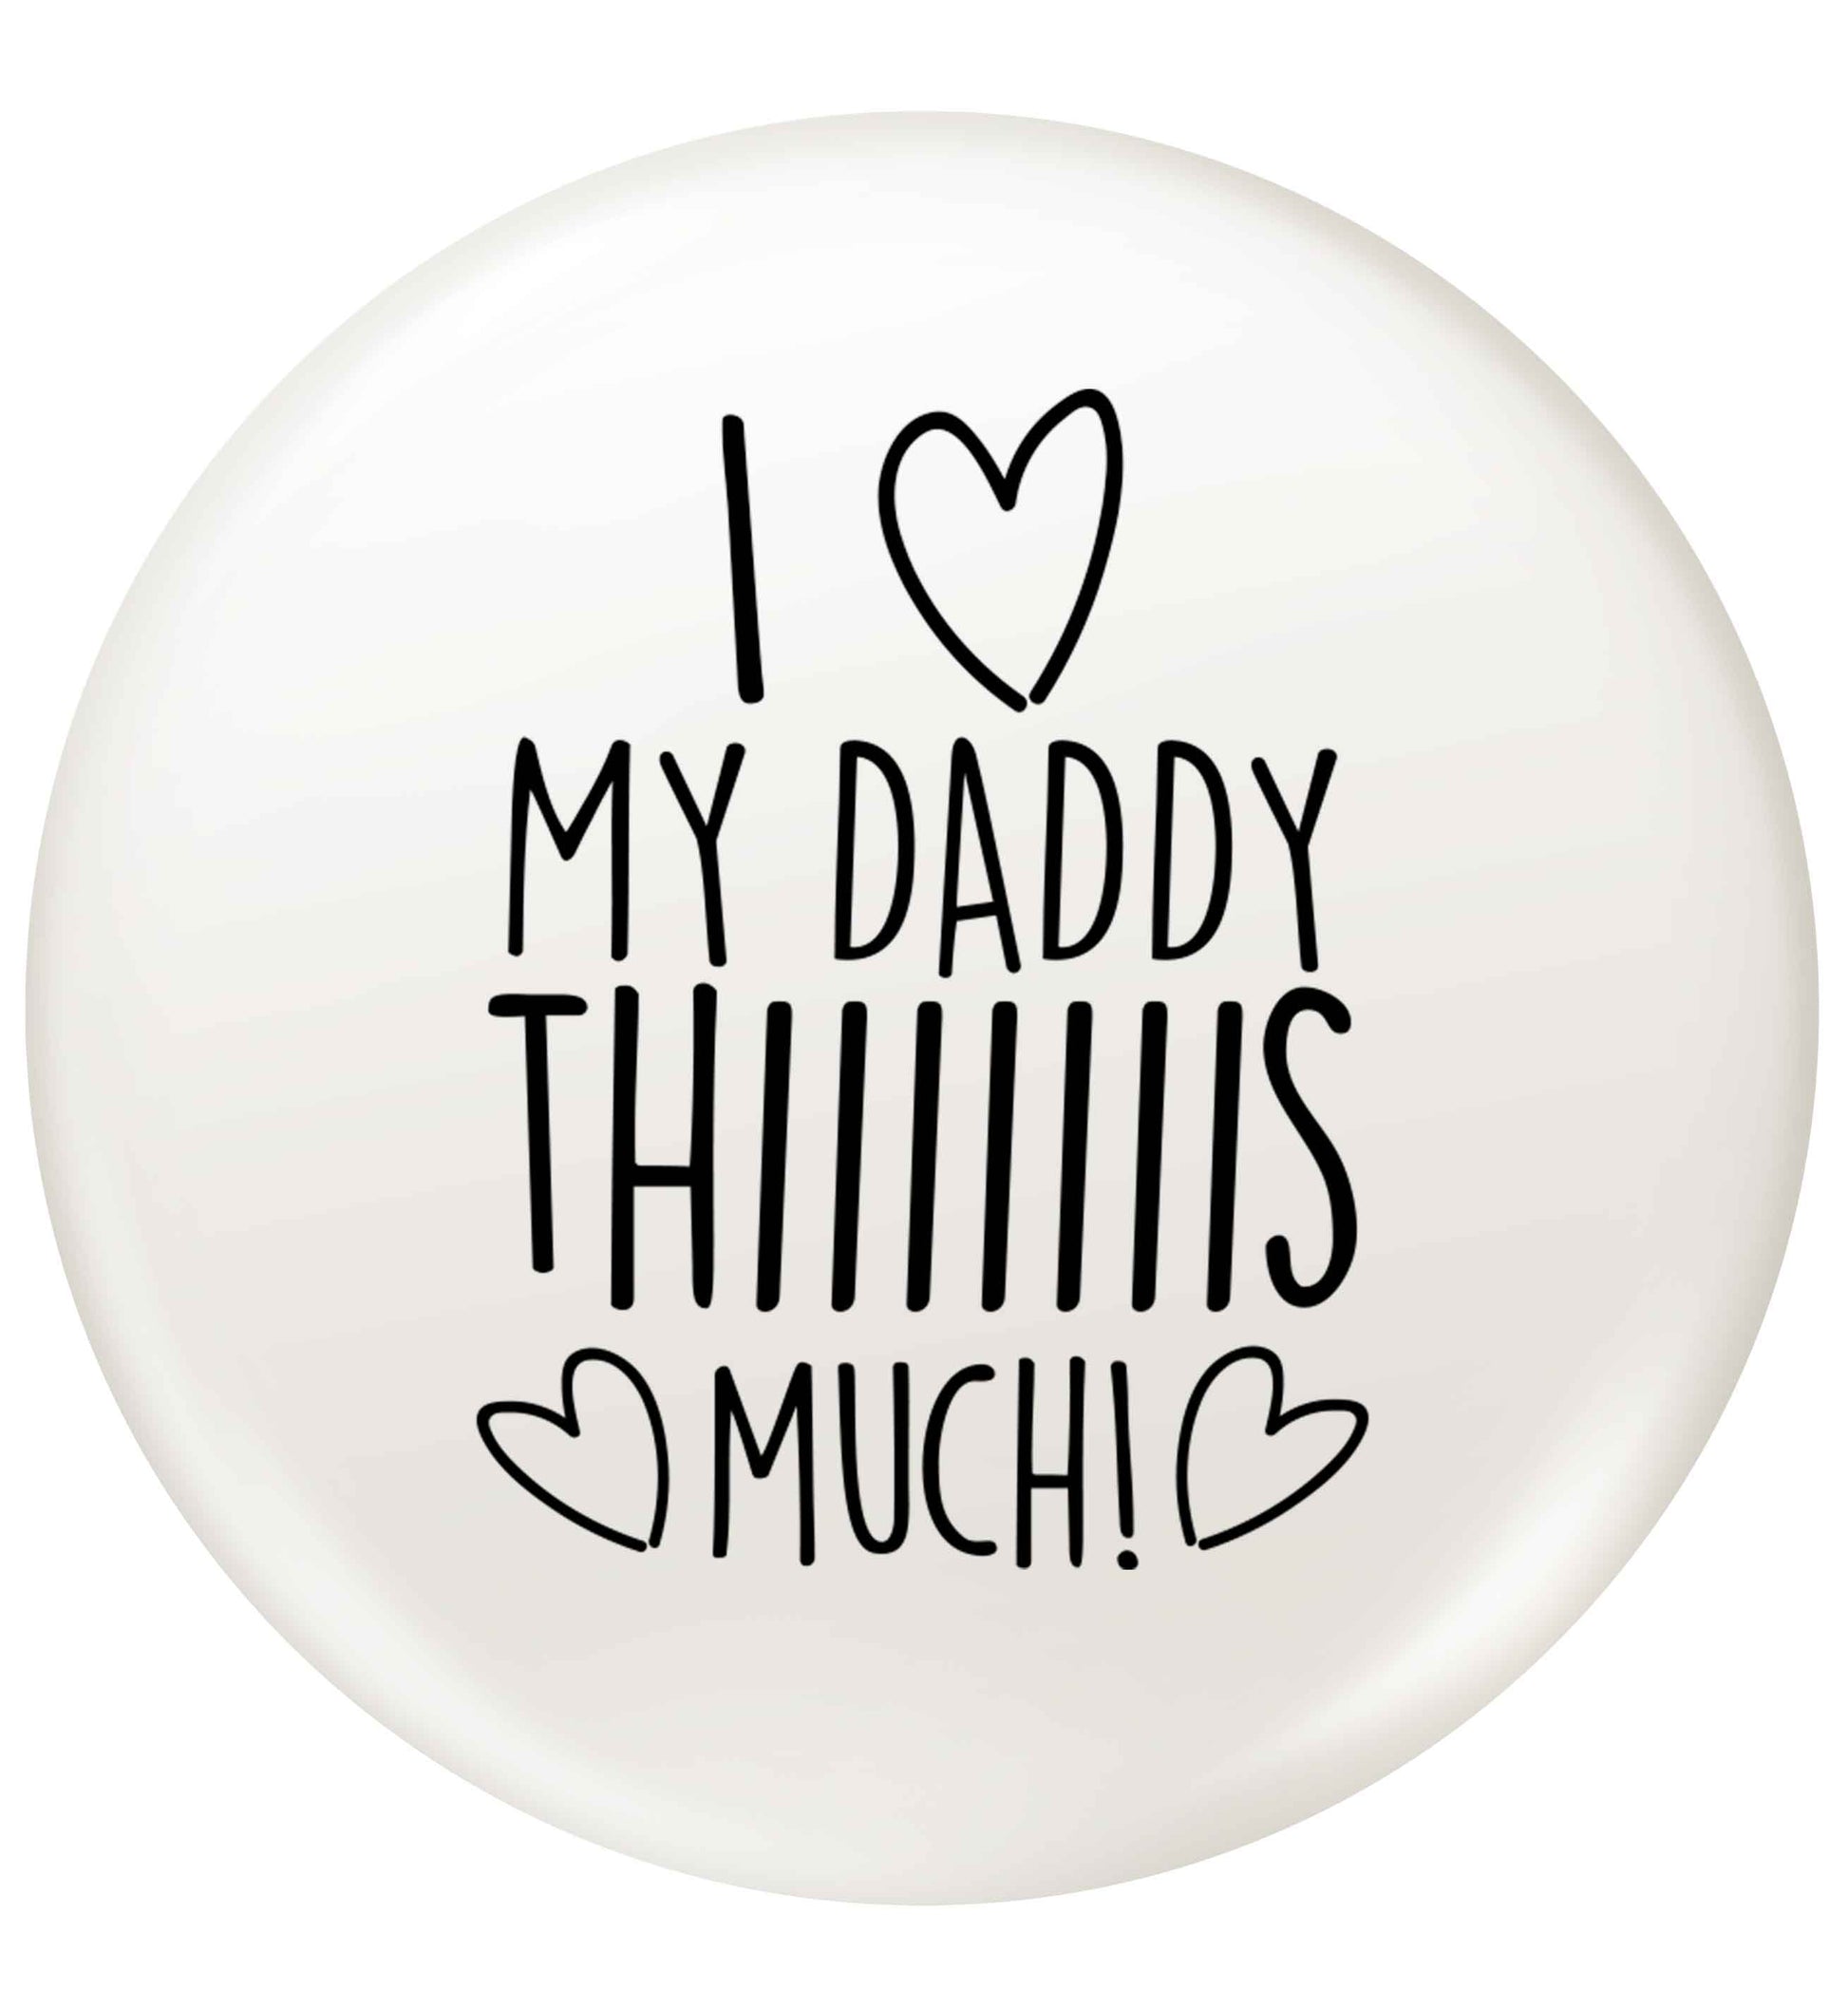 I love my daddy thiiiiis much! small 25mm Pin badge